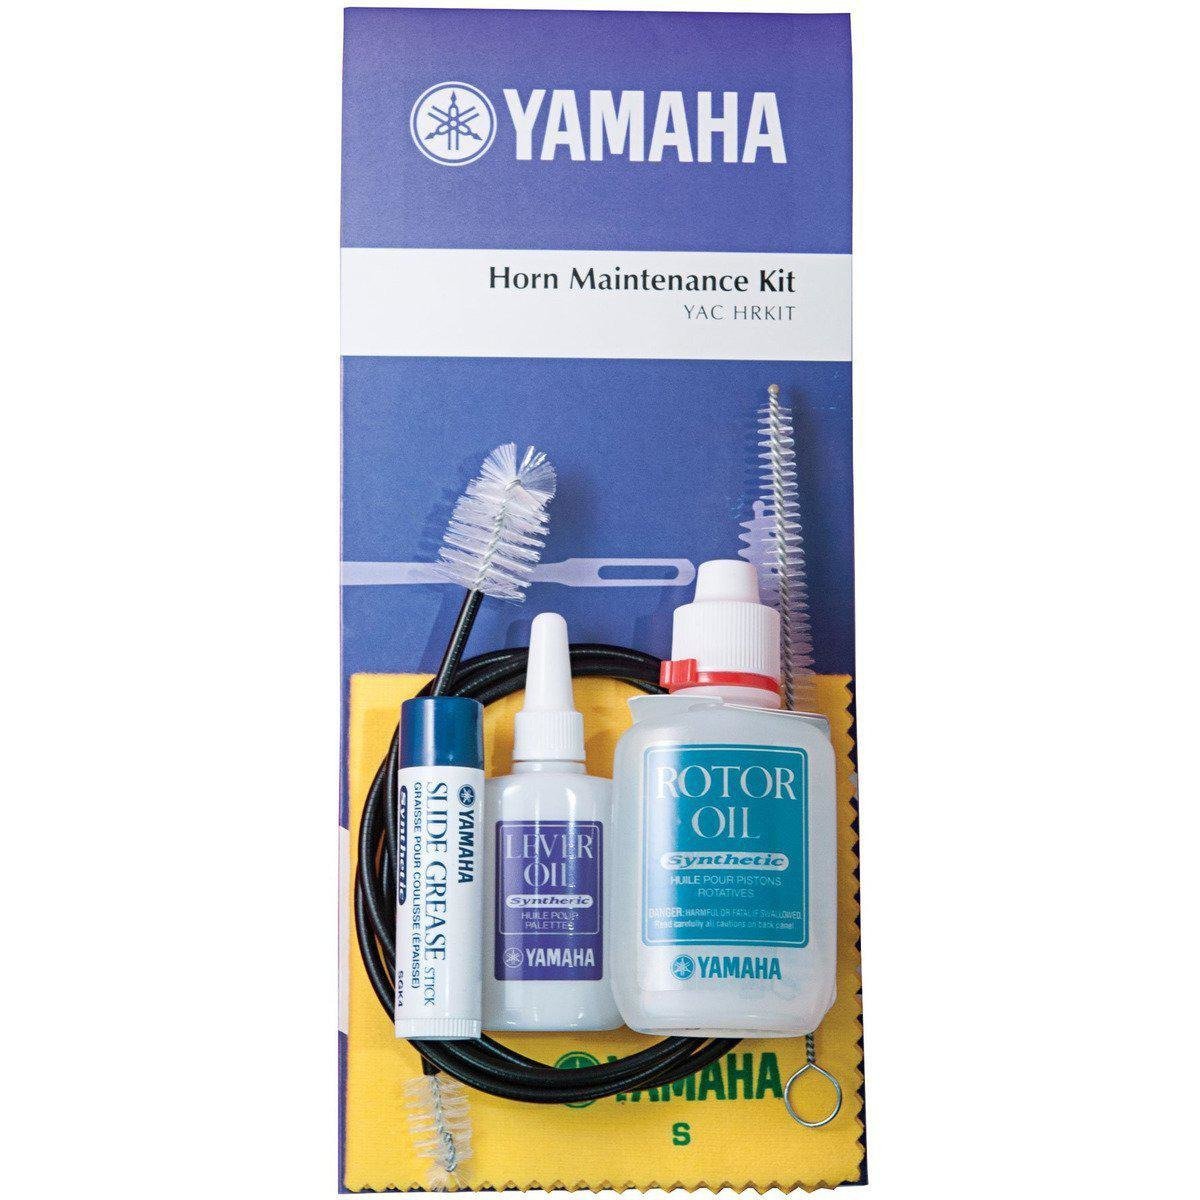 Yamaha Horn Maintenance Kit YACHRKIT-Andy's Music